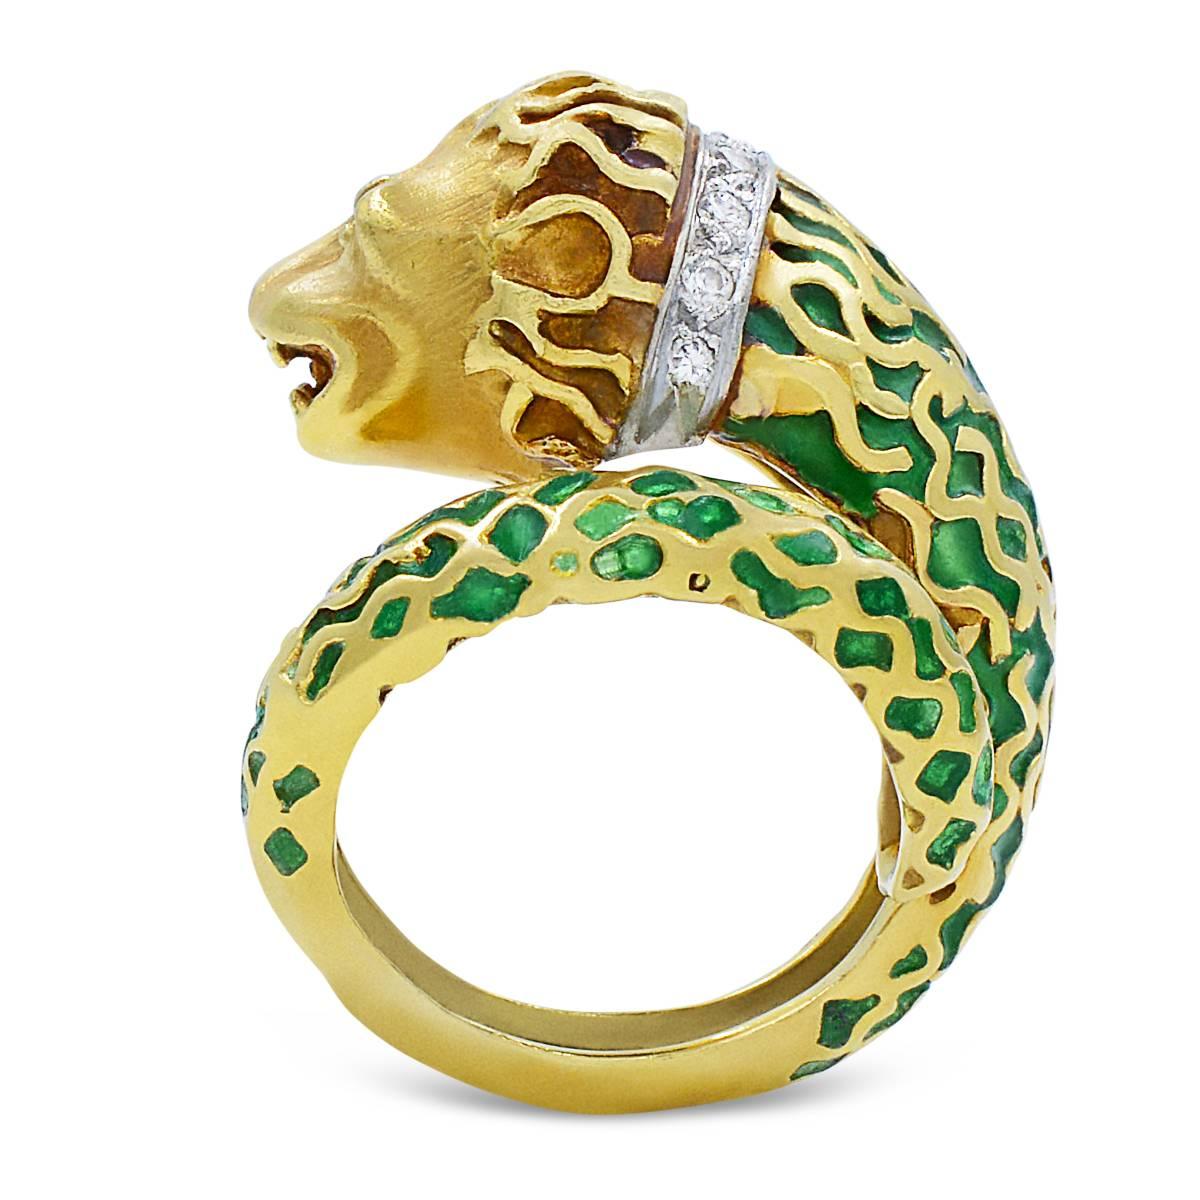 Round Cut Vintage Lion Diamond Enamel Ring in Yellow Gold and Green Enamel